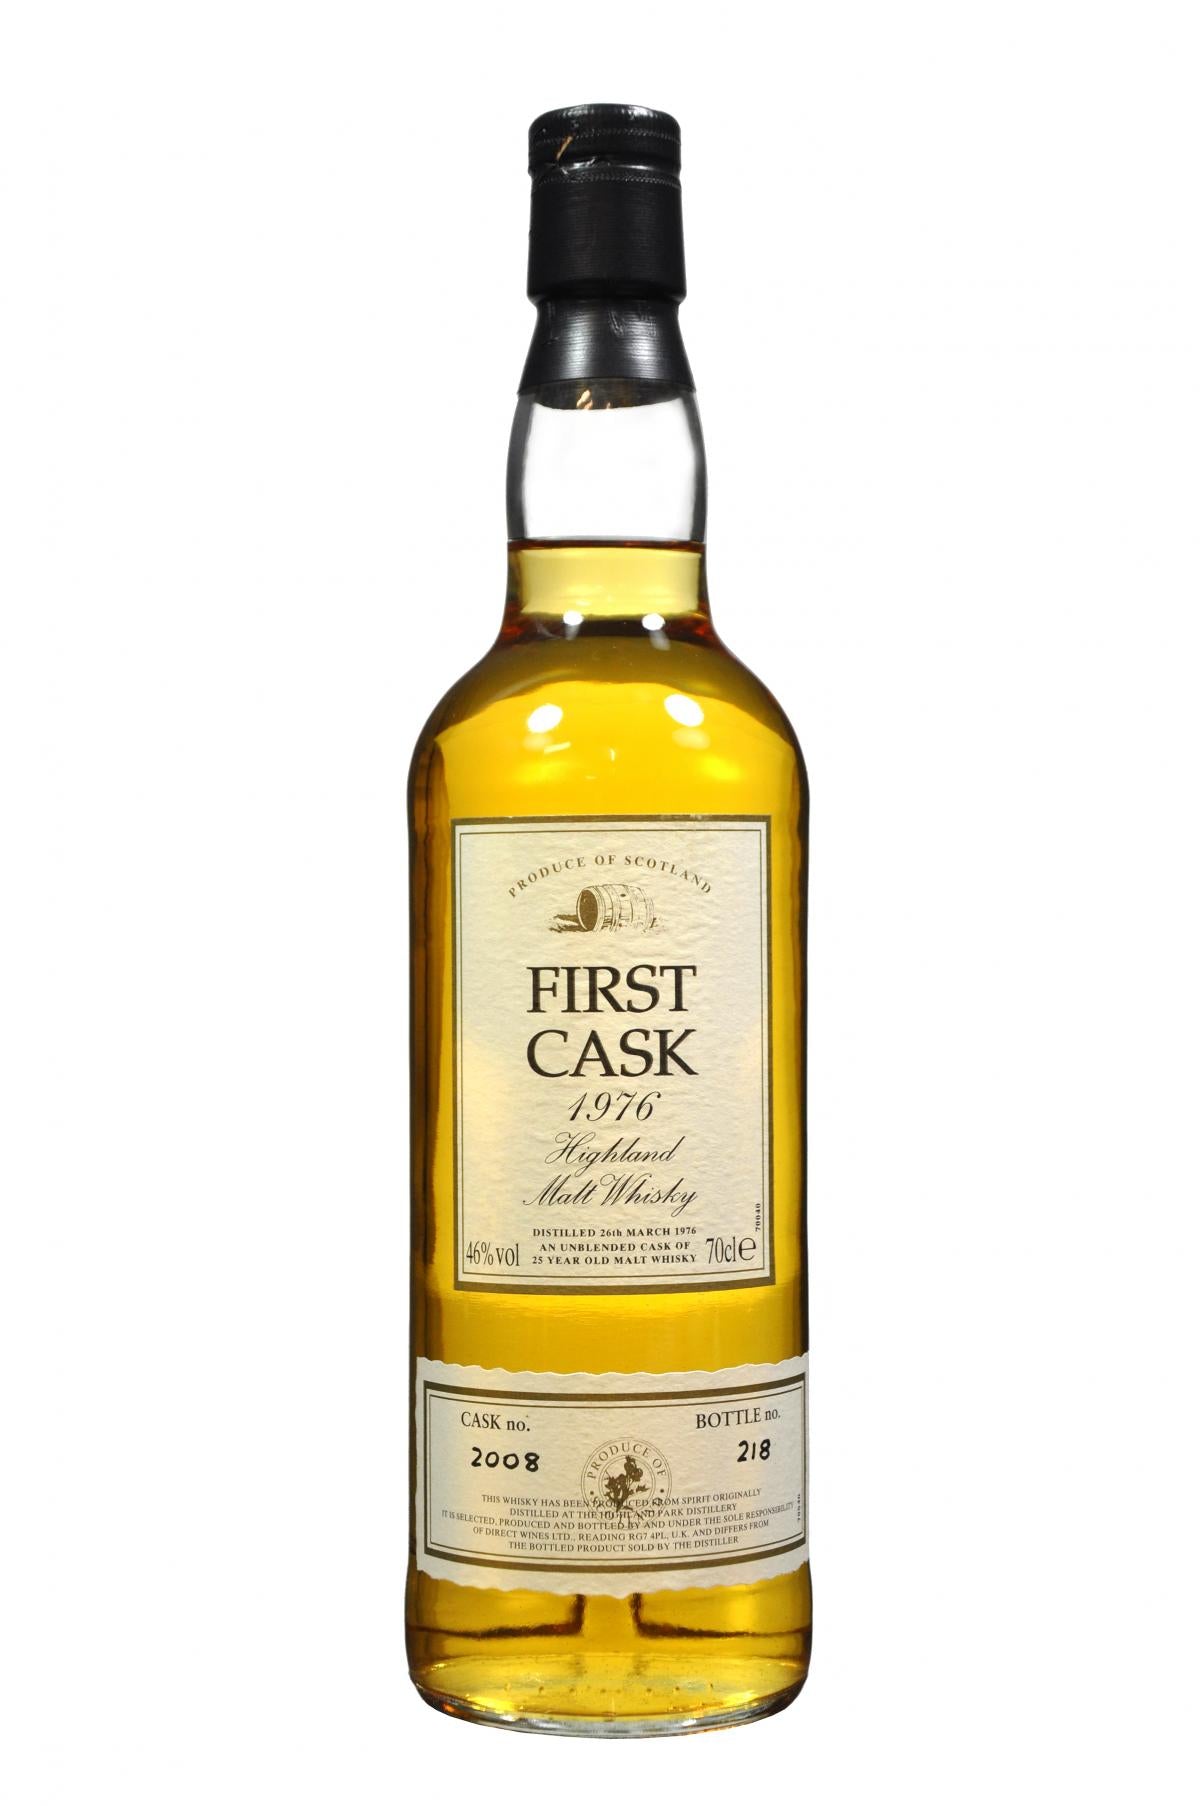 highland park 1976, 25 year old, first cask 2008 , single malt scotch whisky